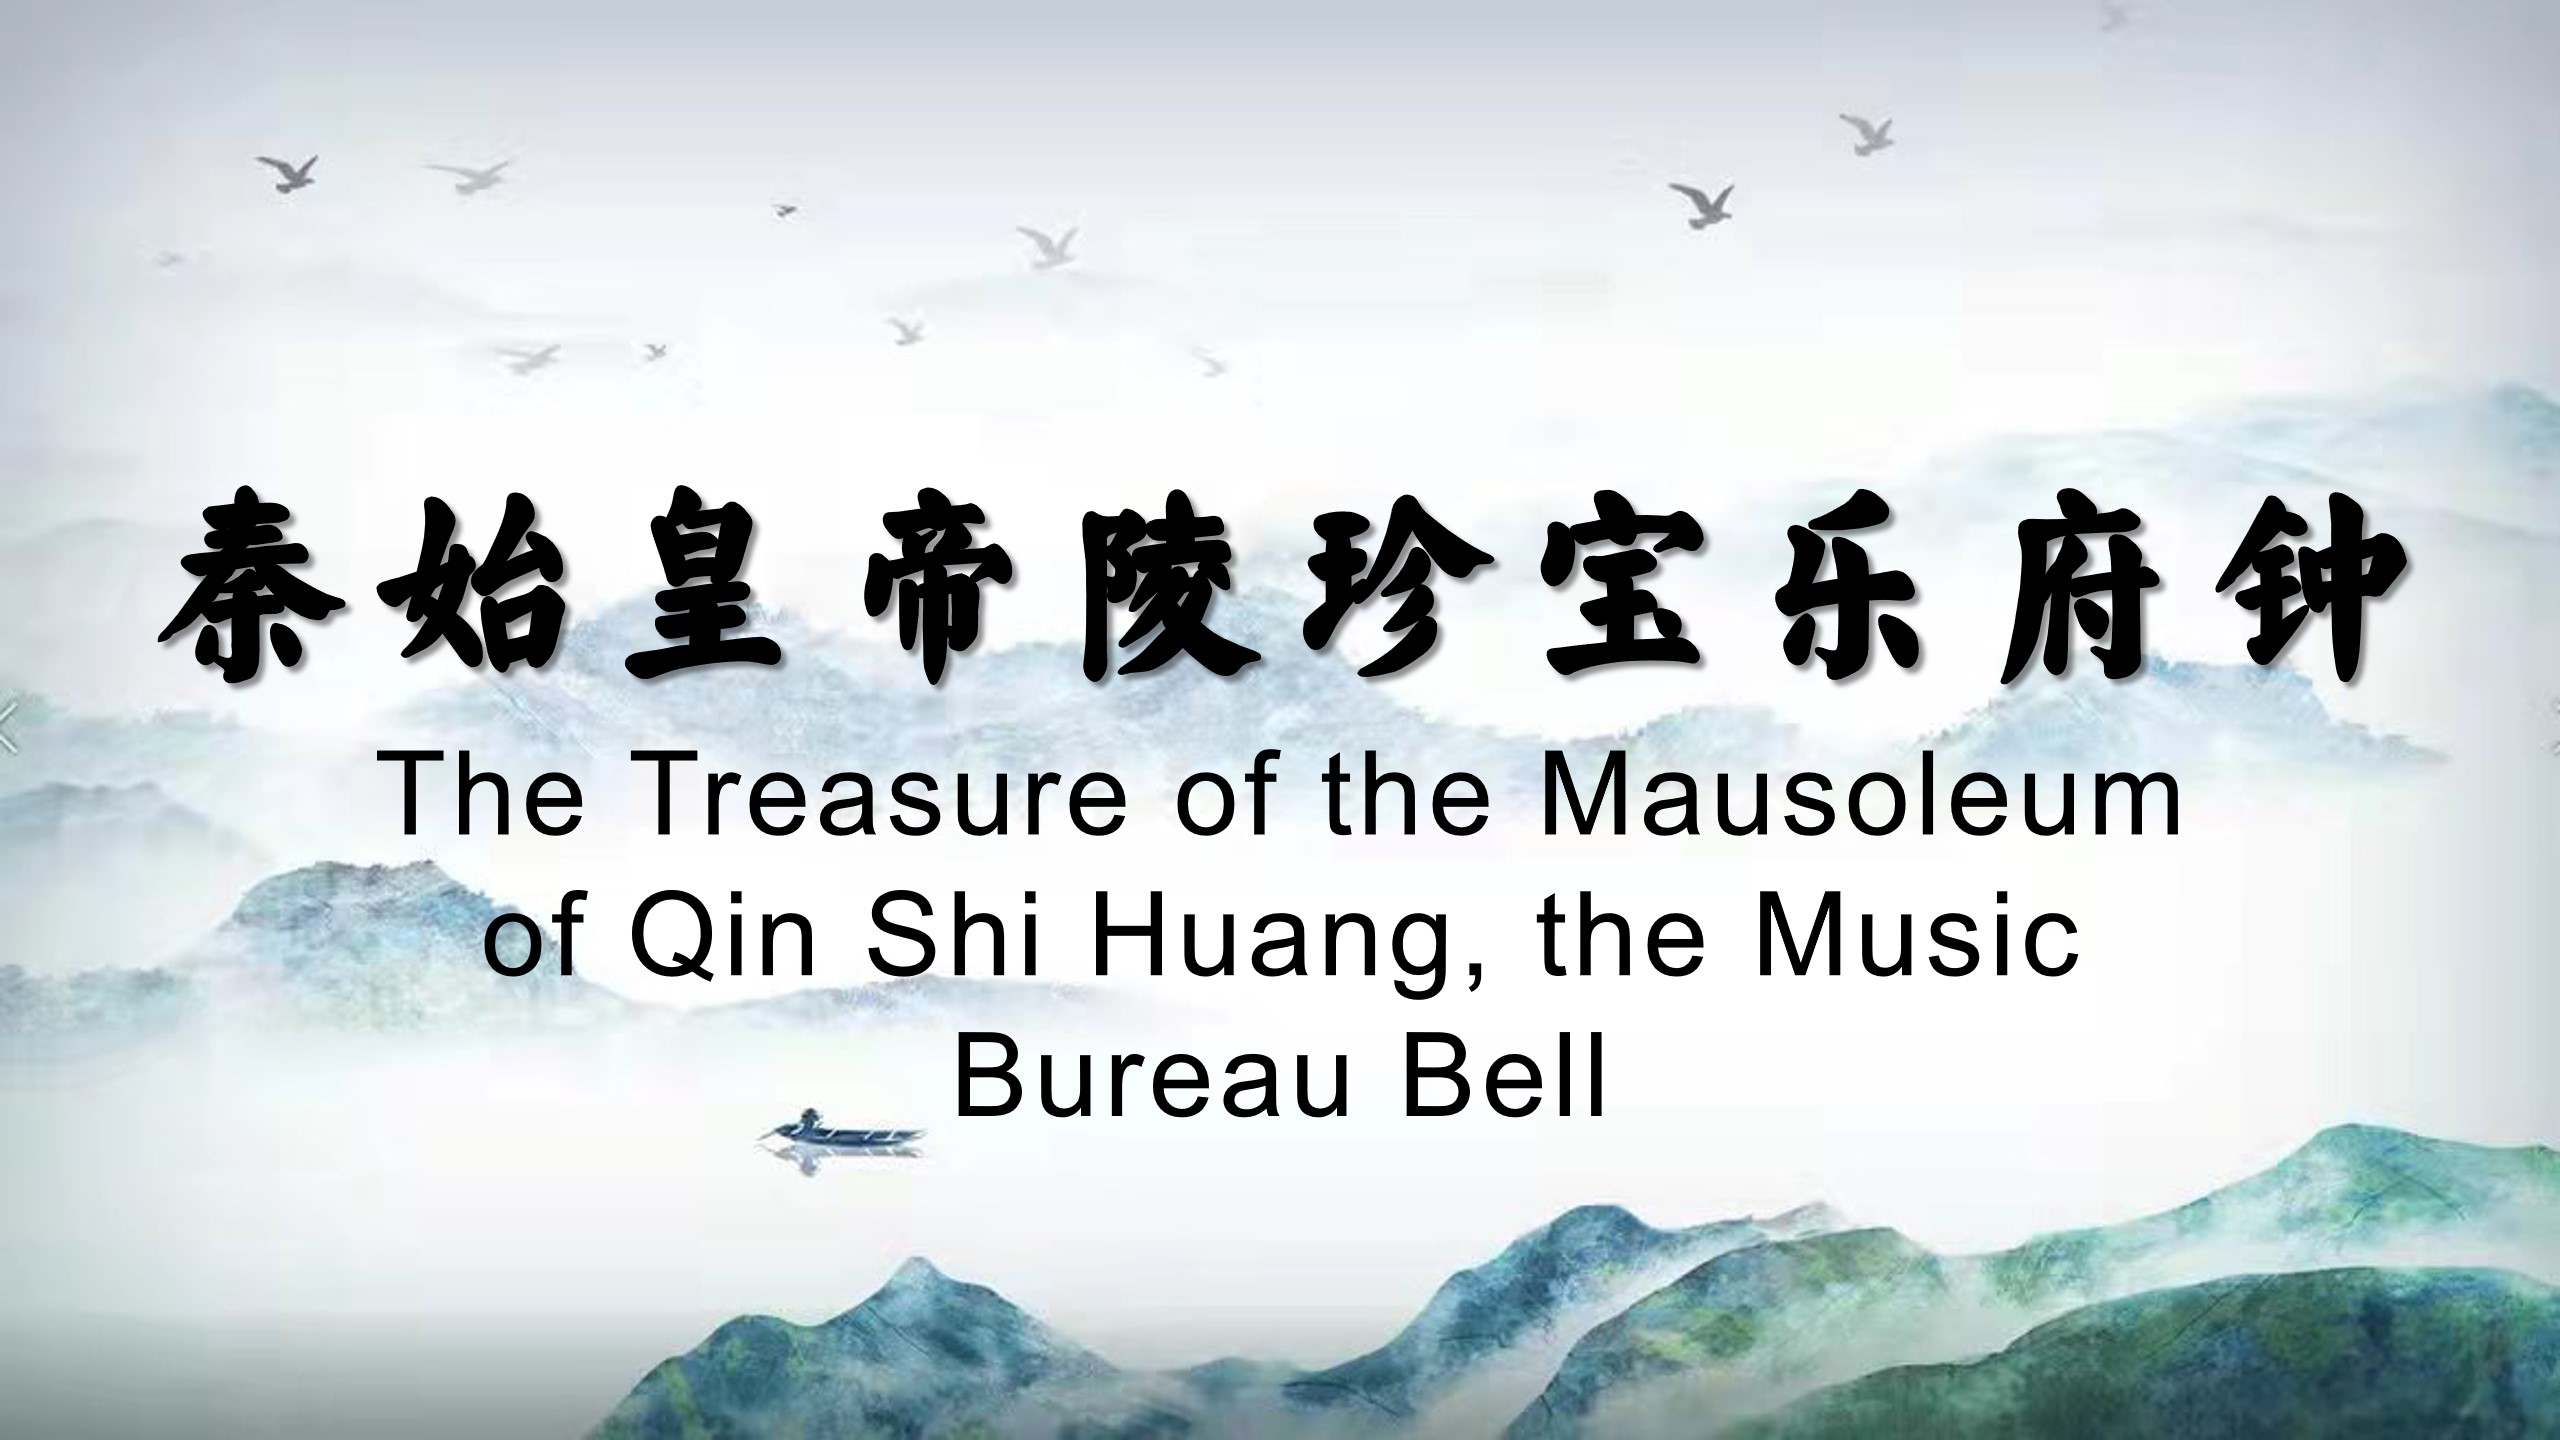 The Treasure of the Mausoleum of Qin Shi Huang, the Music Bureau Bell